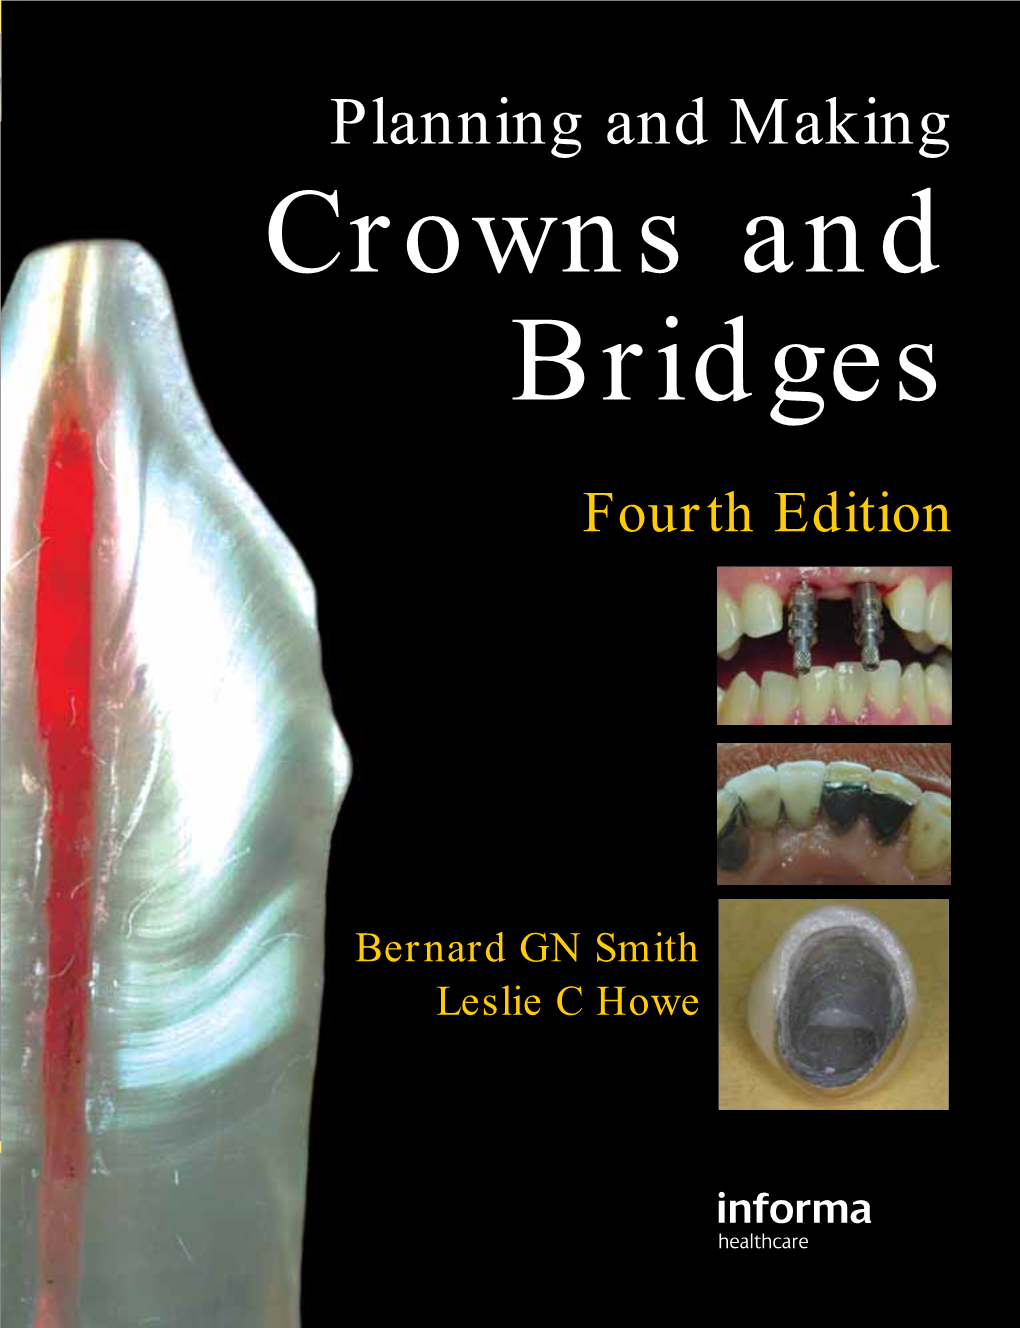 Crowns and Bridges